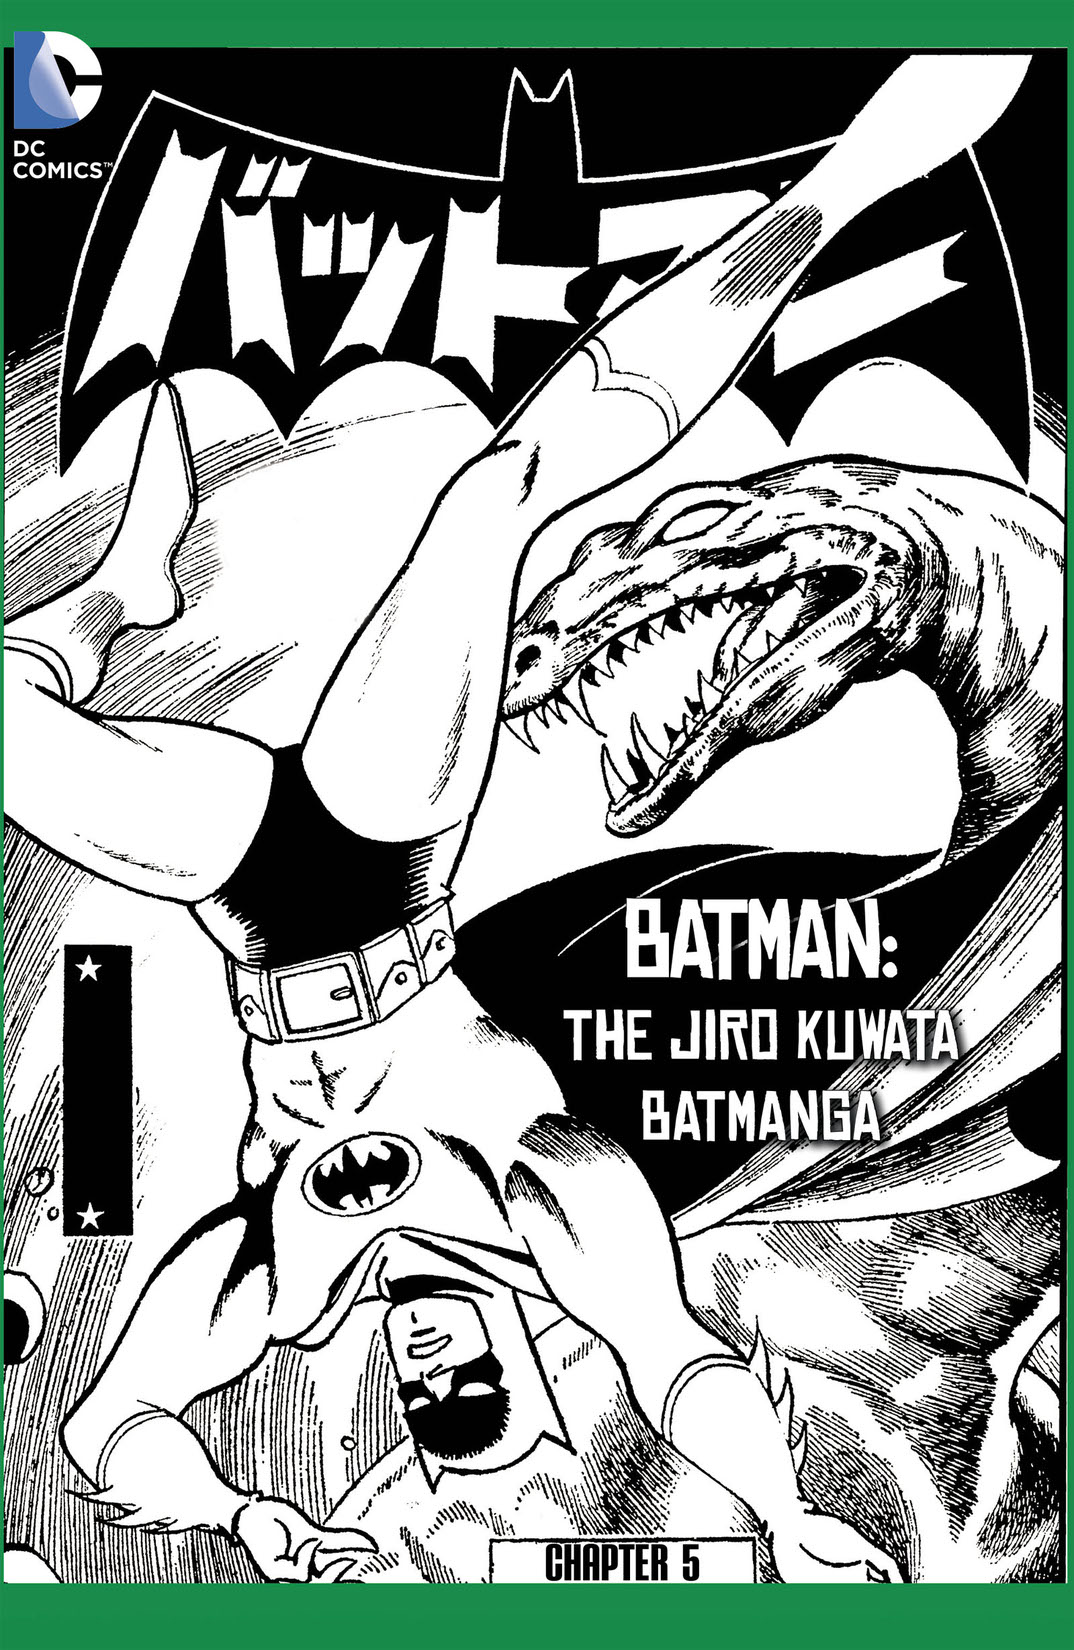 Batman: The Jiro Kuwata Batmanga #39 preview images